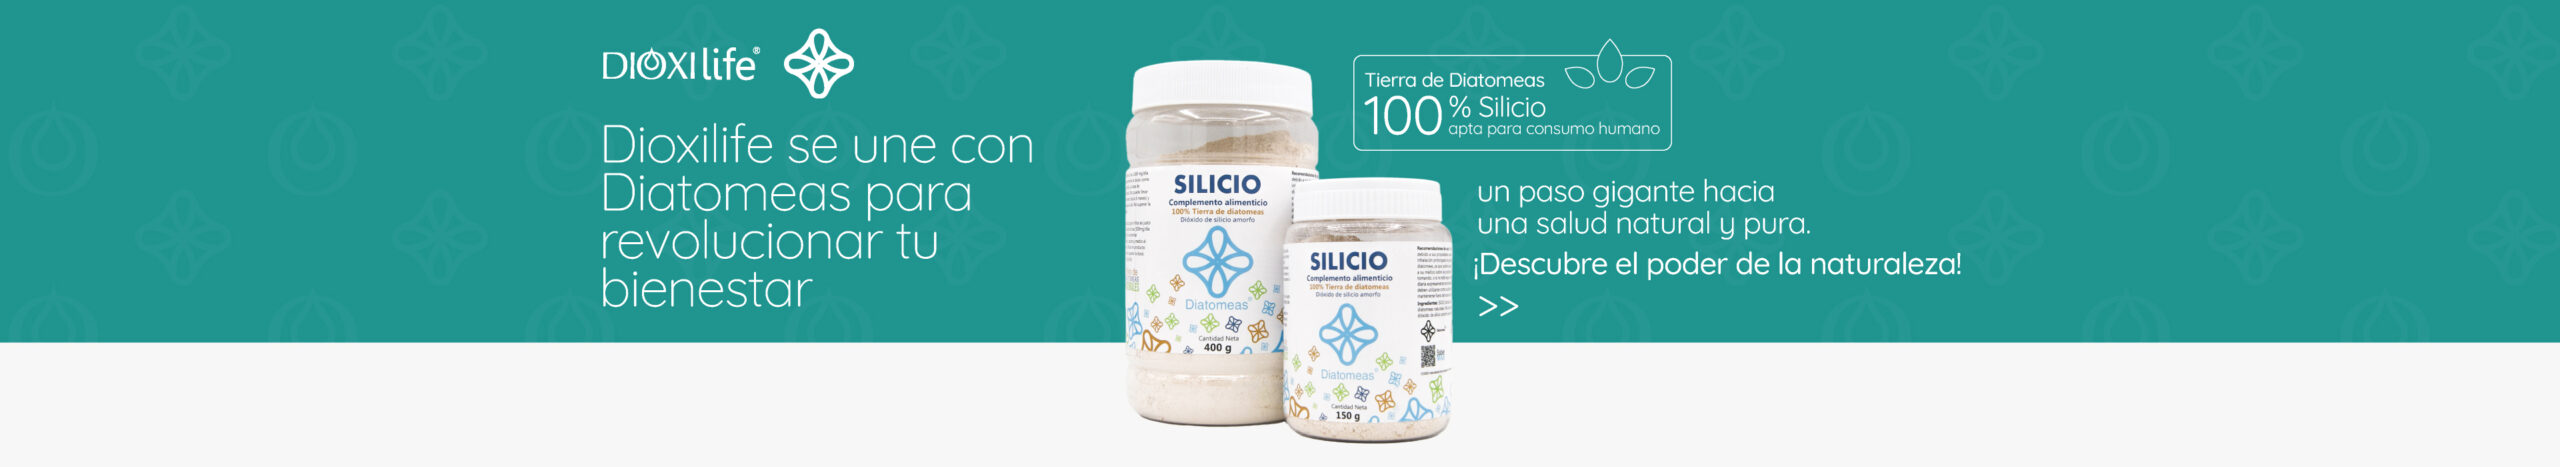 Silicio 100% tierra de diatomeas de uso alimentario 150g Diatomeas